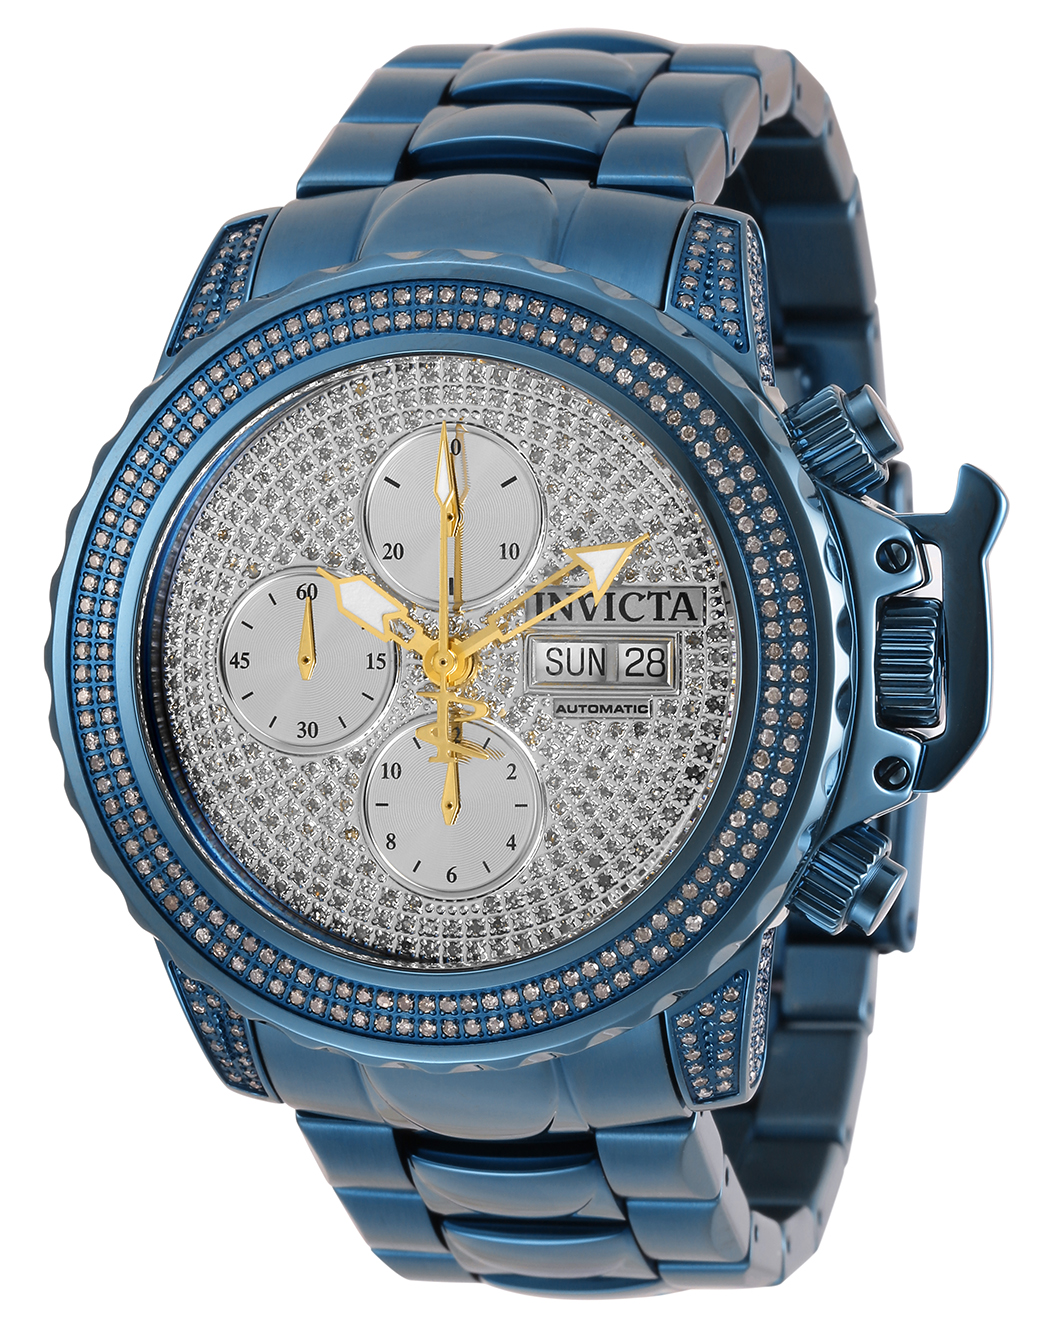 Invicta Subaqua 3.41 Carat Diamond Automatic Men%27s Watch - 47mm, Blue (30663)